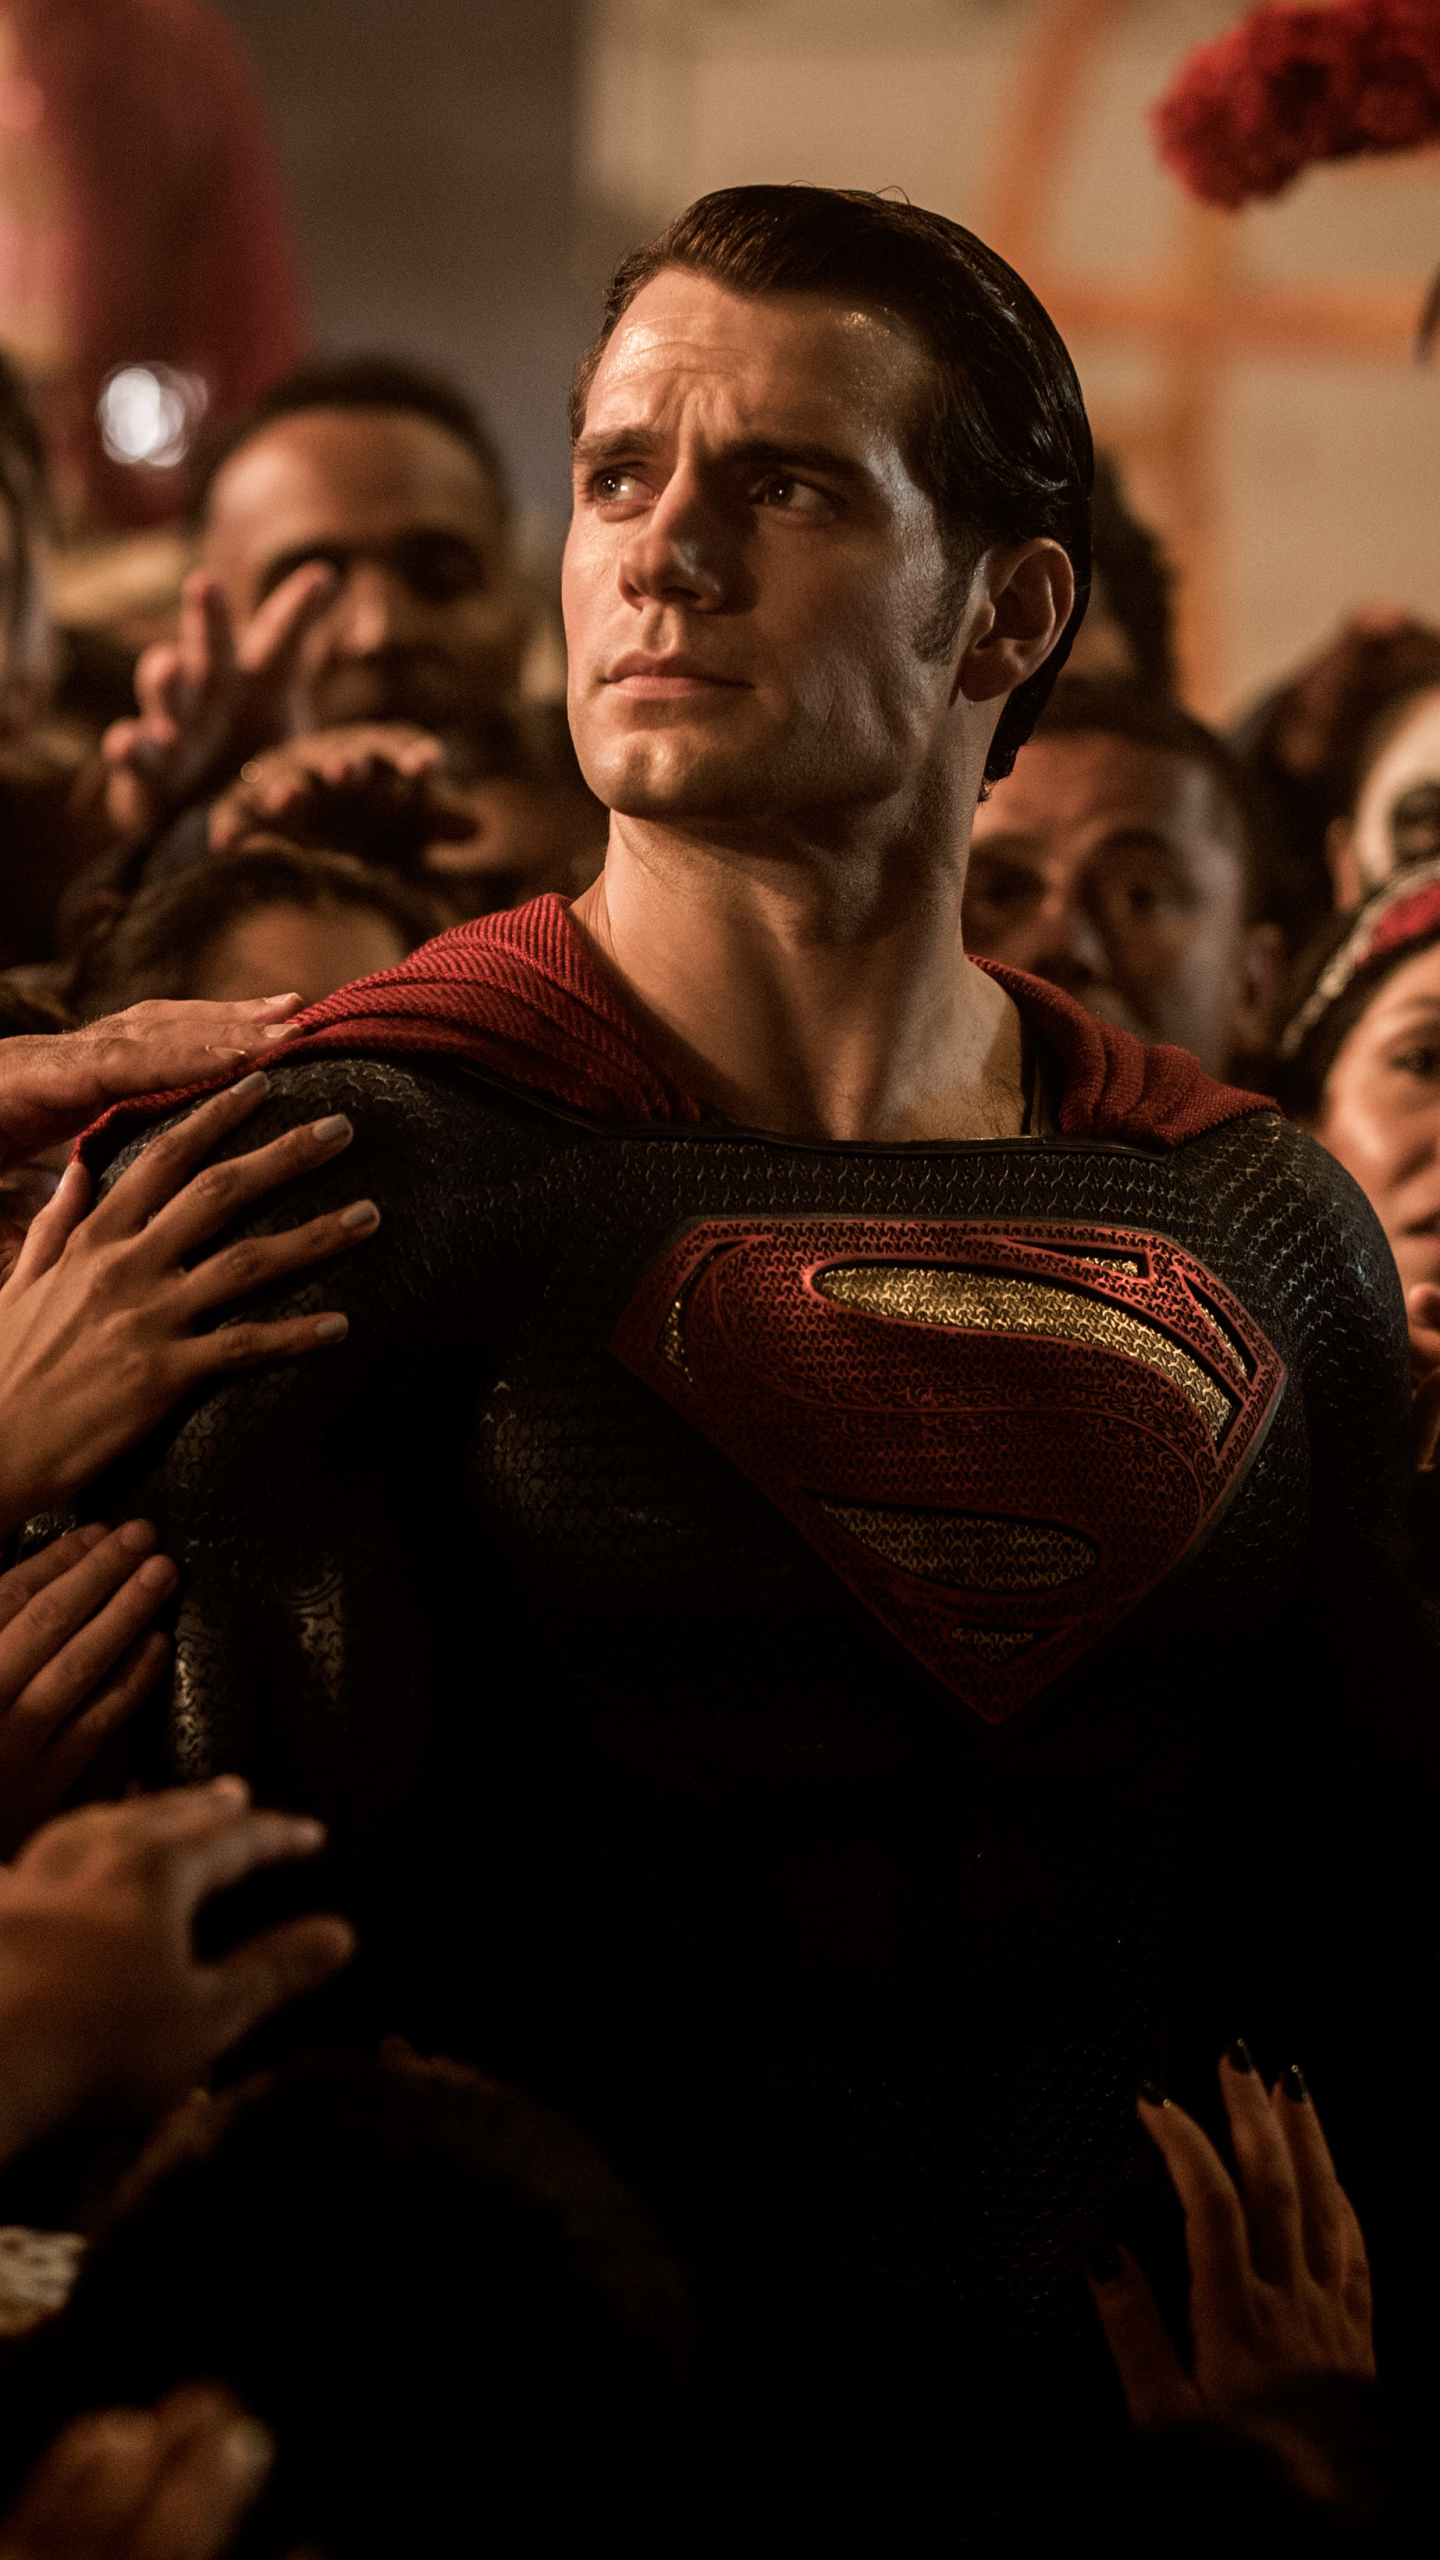 Скачать обои бесплатно Кино, Супермен, Генри Кавилл, Бэтмен Против Супермена: На Заре Справедливости картинка на рабочий стол ПК